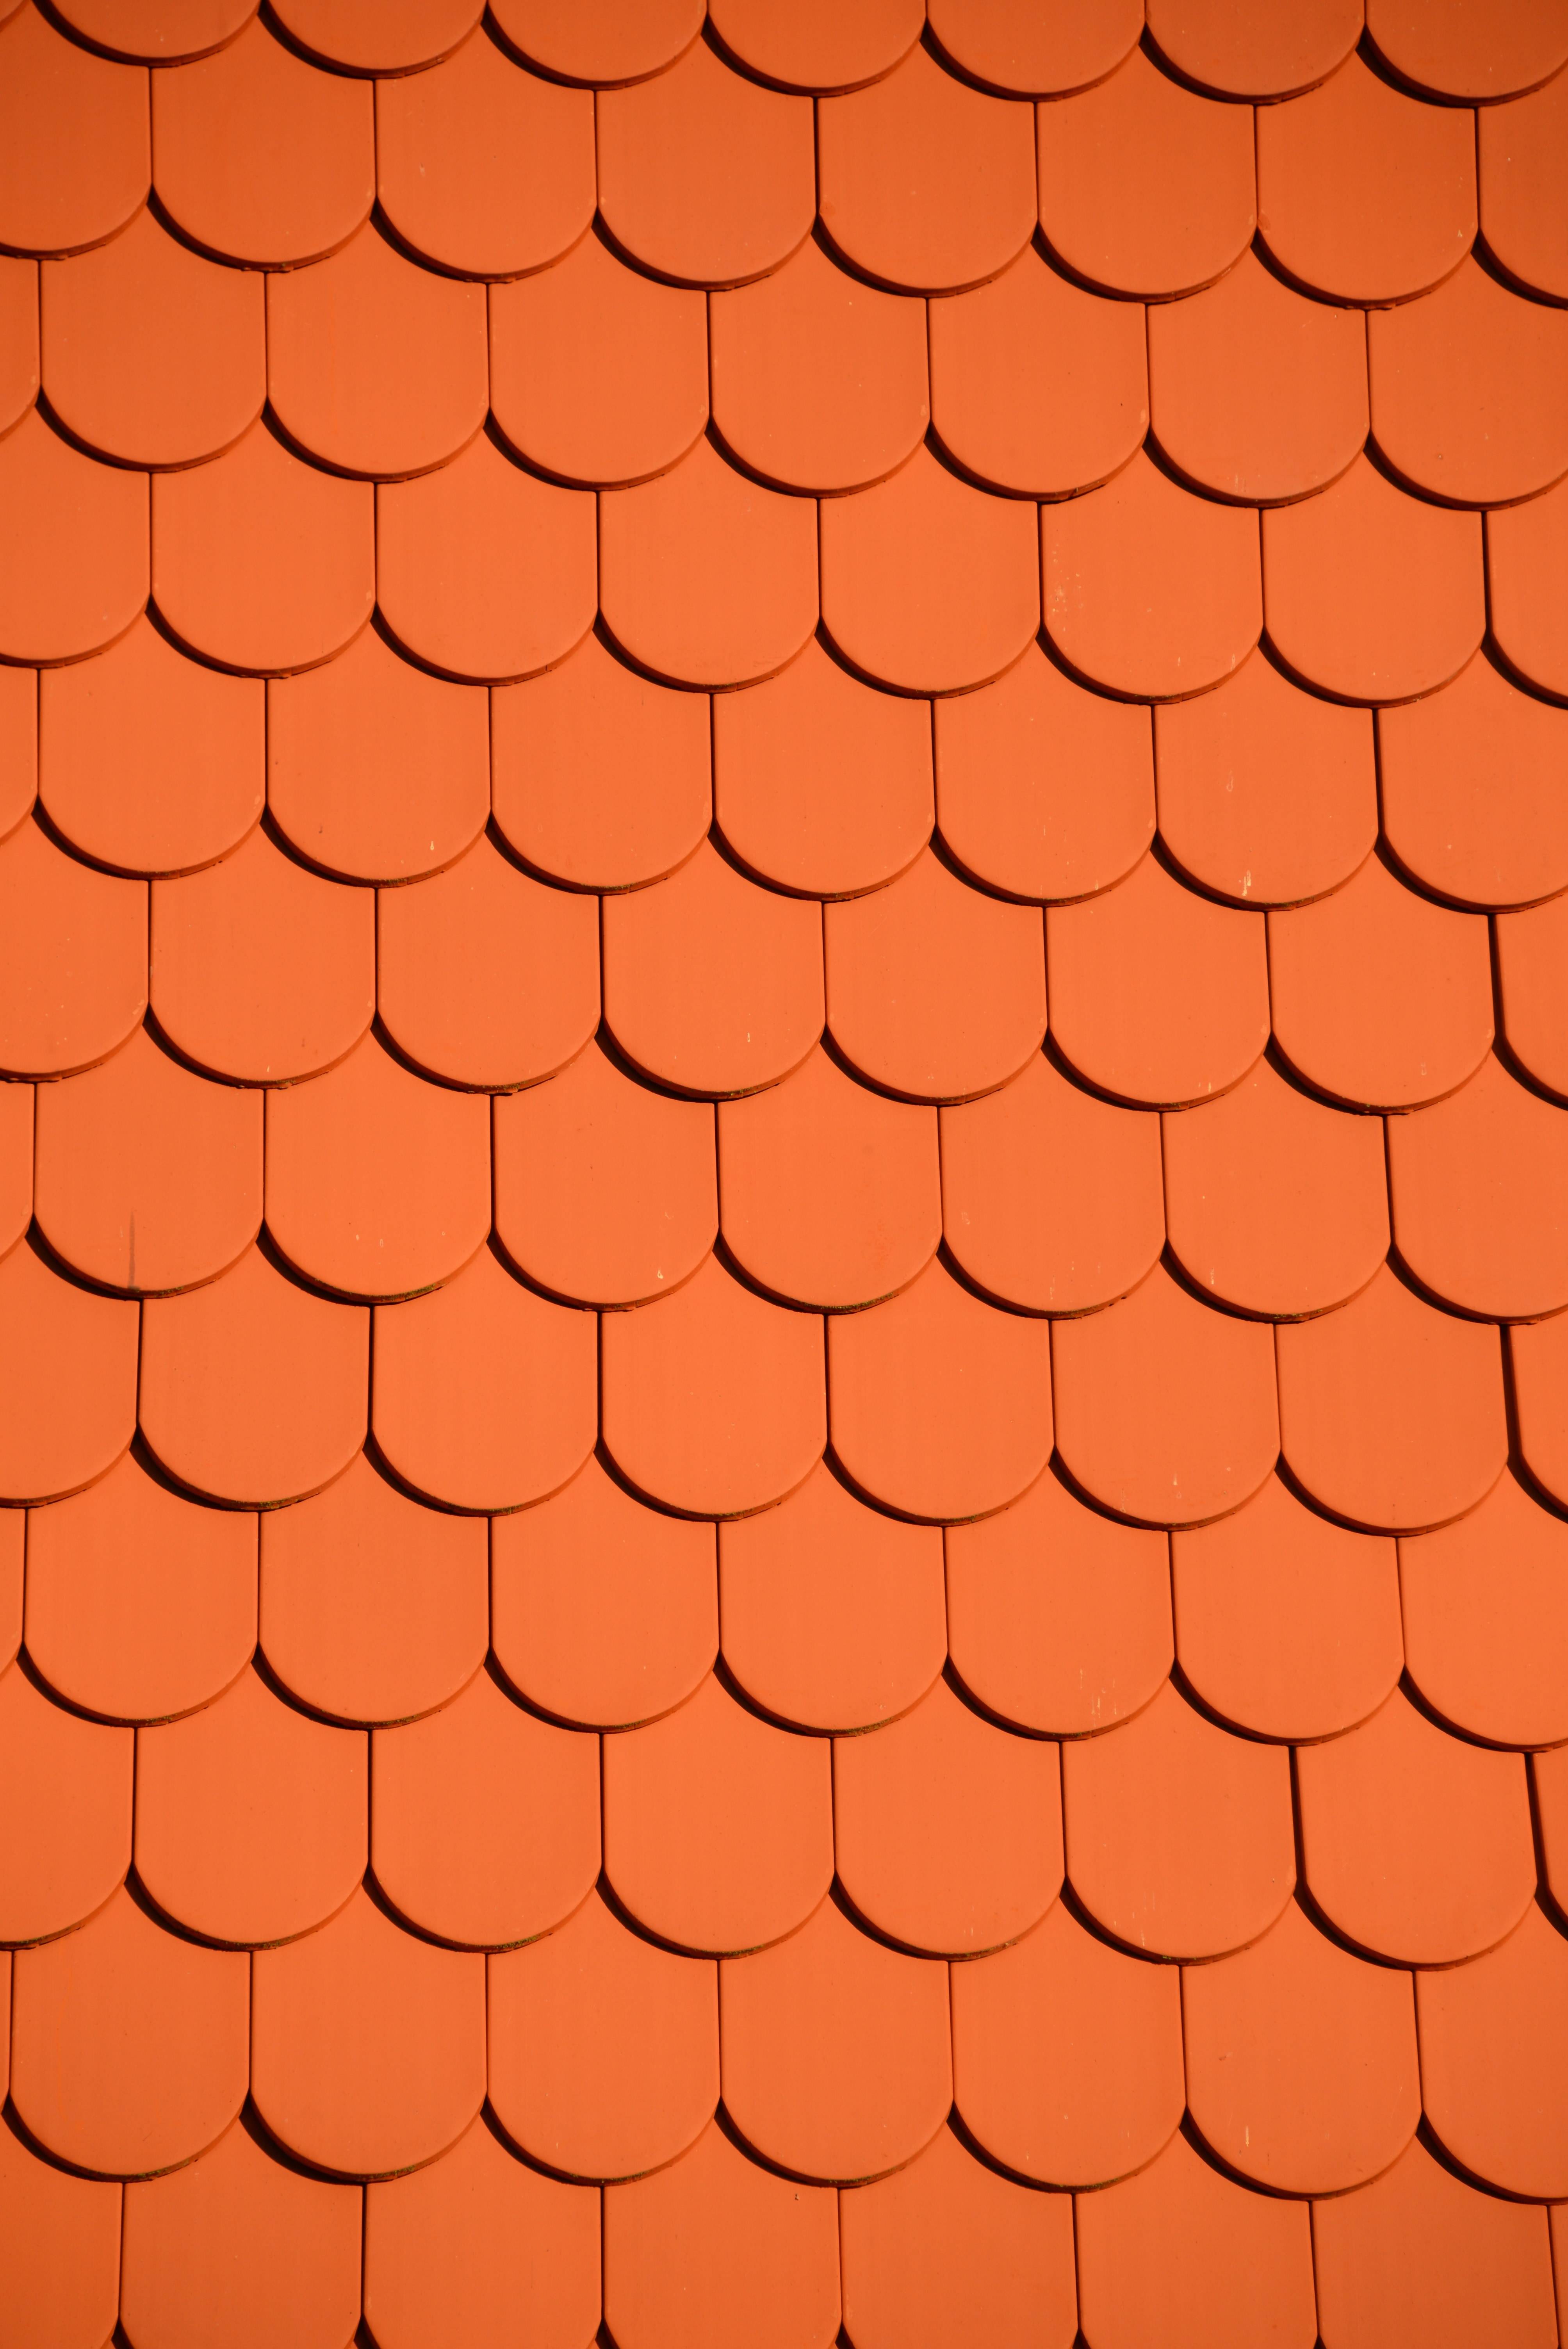 orange roof shingles